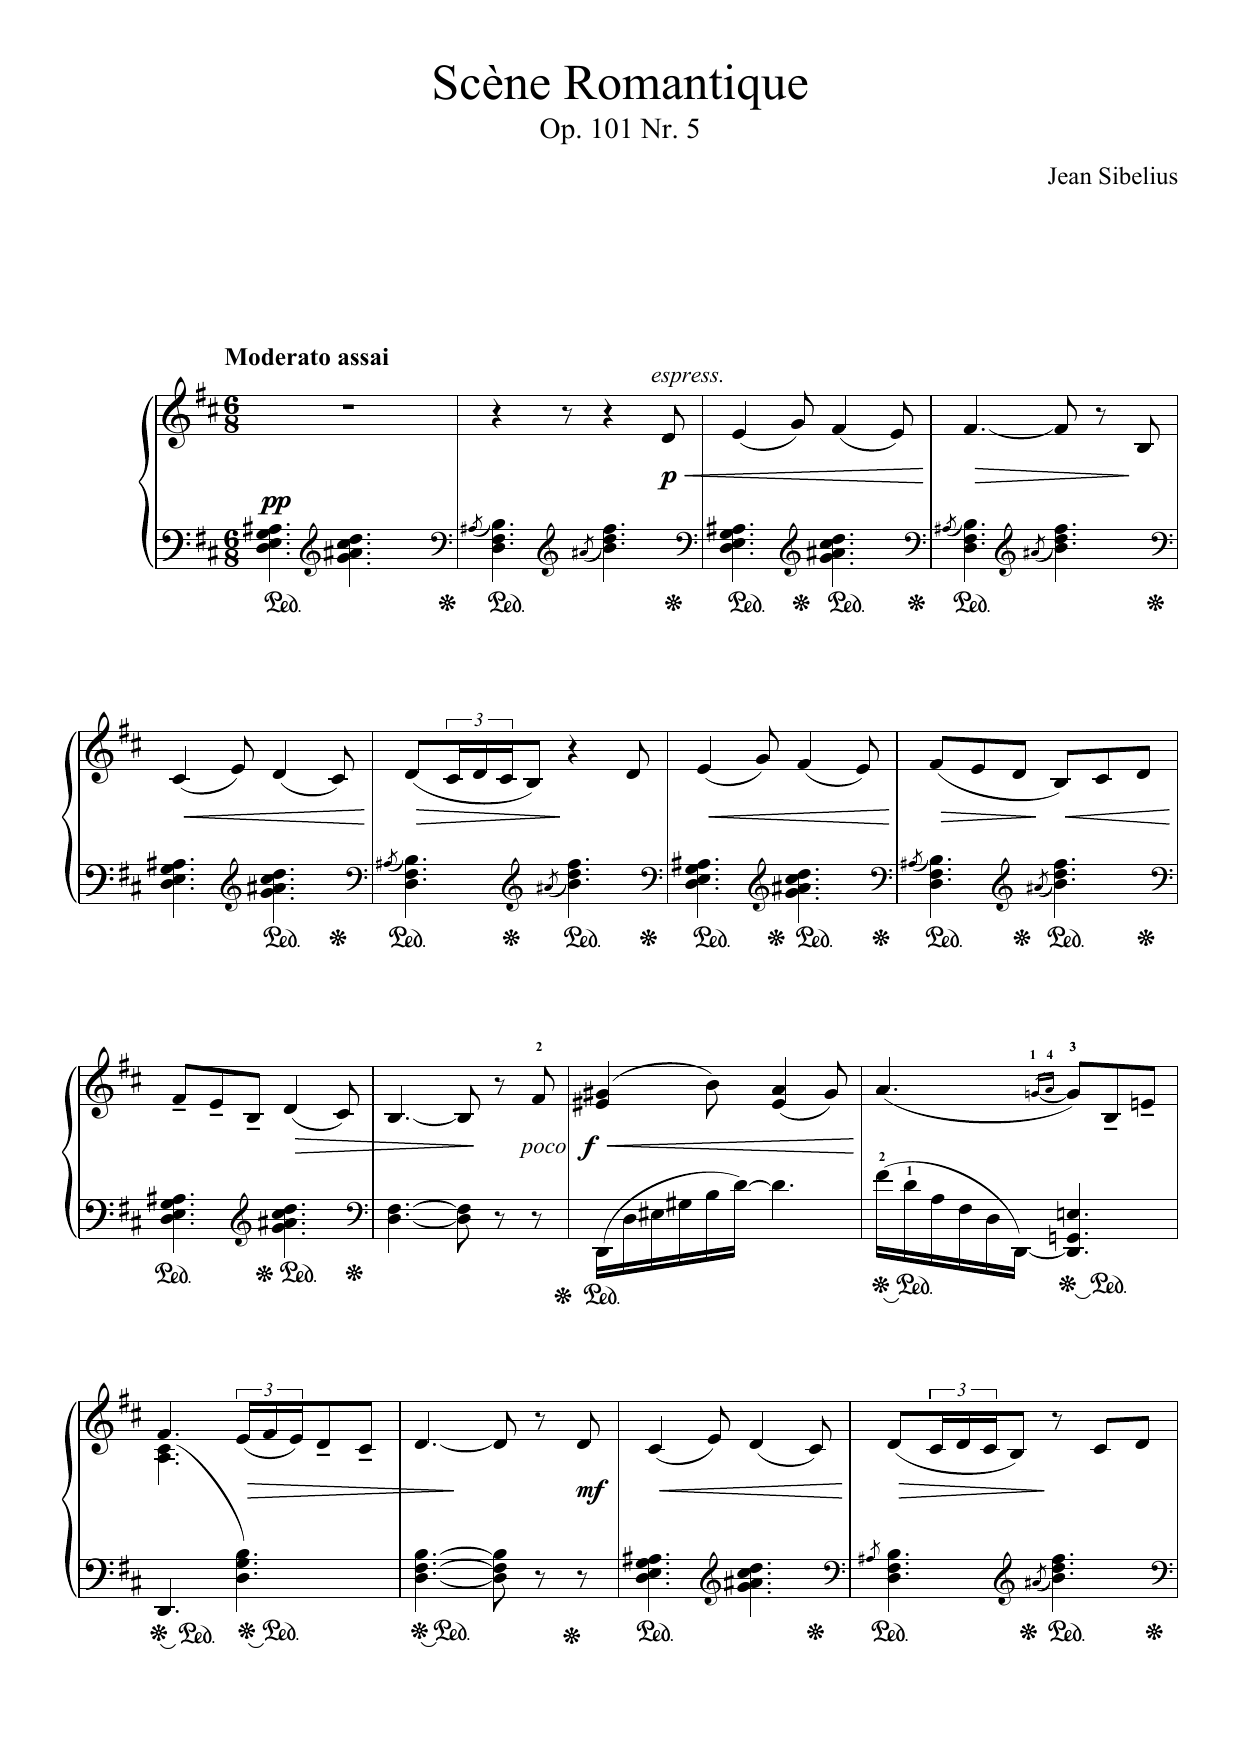 Jean Sibelius 5 Morceaux Romantiques, Op.101 - V. Scene Romantique sheet music notes and chords arranged for Piano Solo